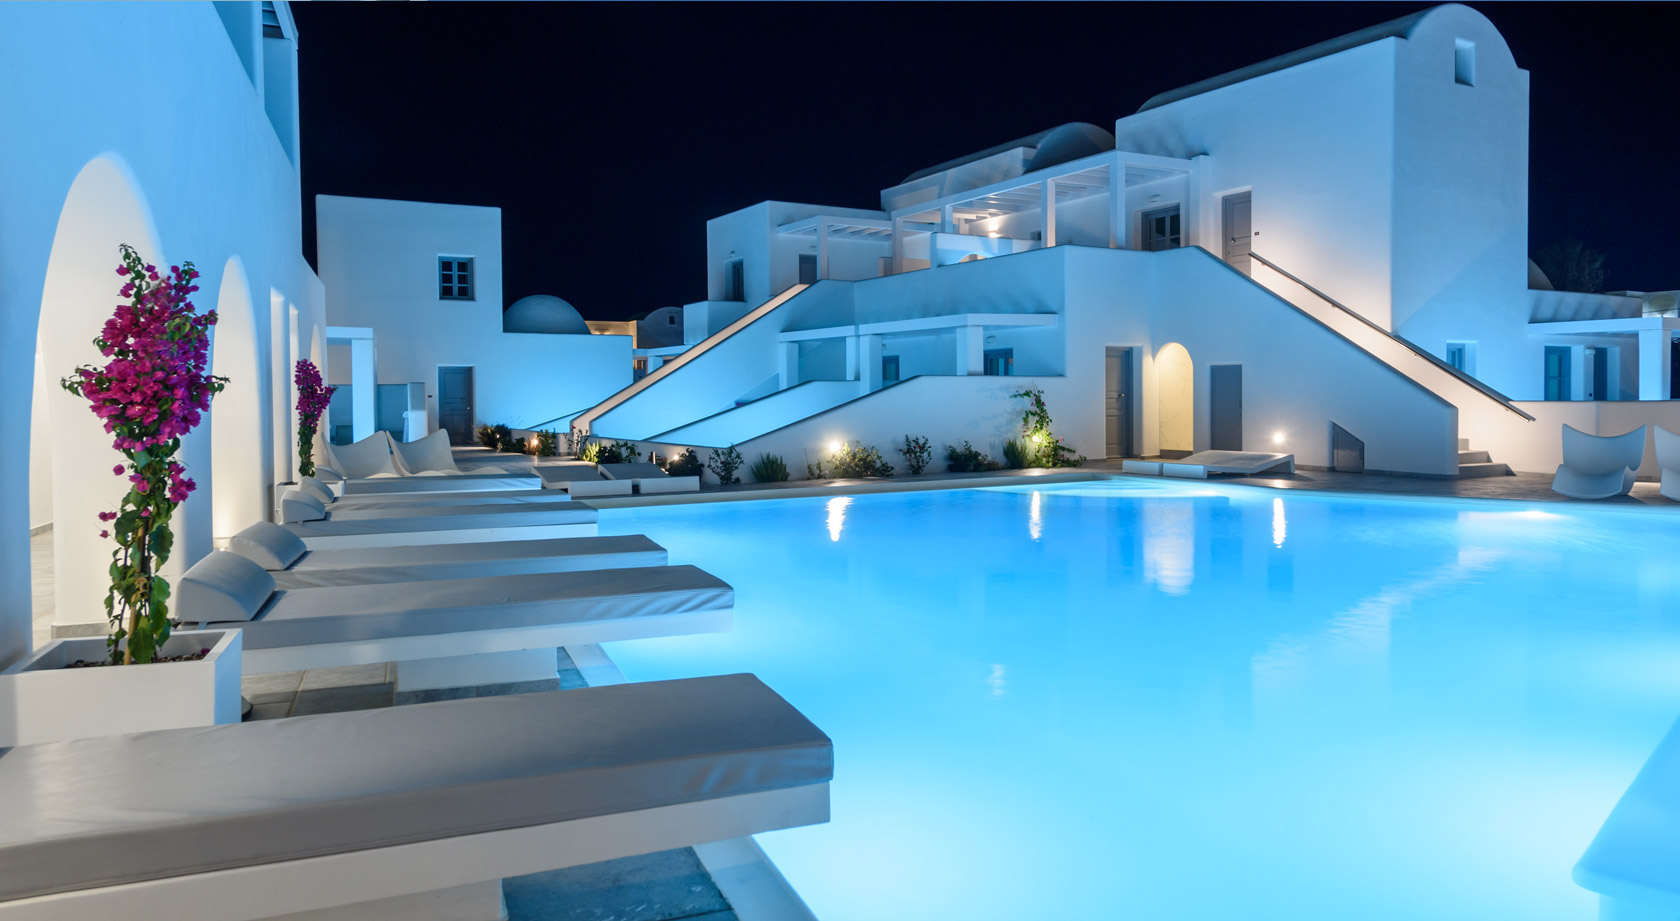 Antoperla Luxury Hotel & Spa Perissa Santorini – Exterior View of Swimming Pool & private pools